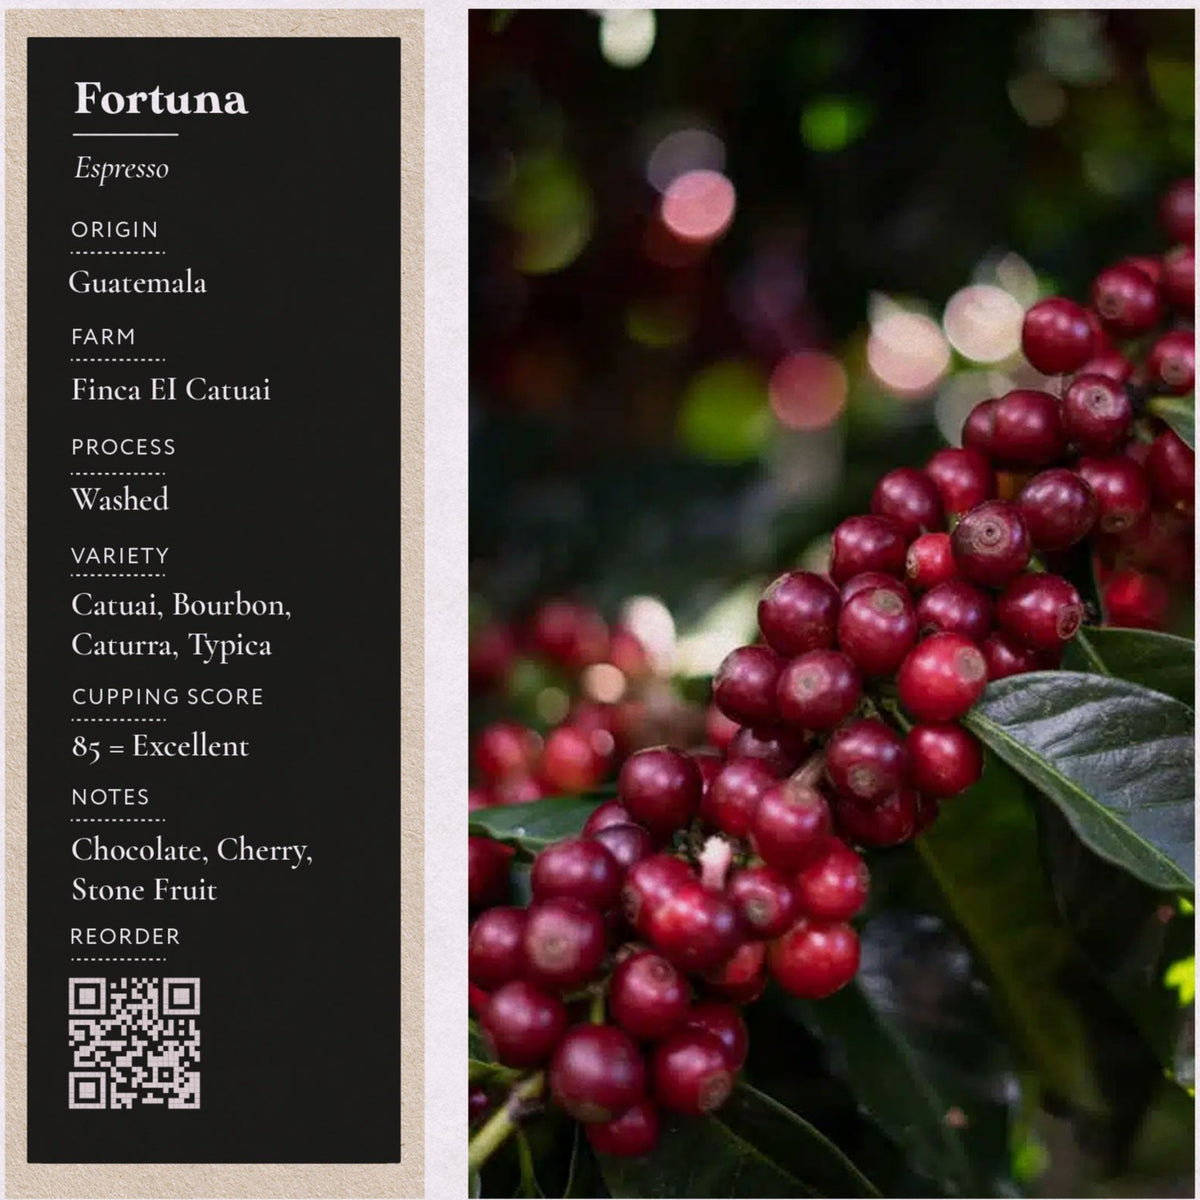 Fortuna Espresso - Guatemala, Finca El Catuai